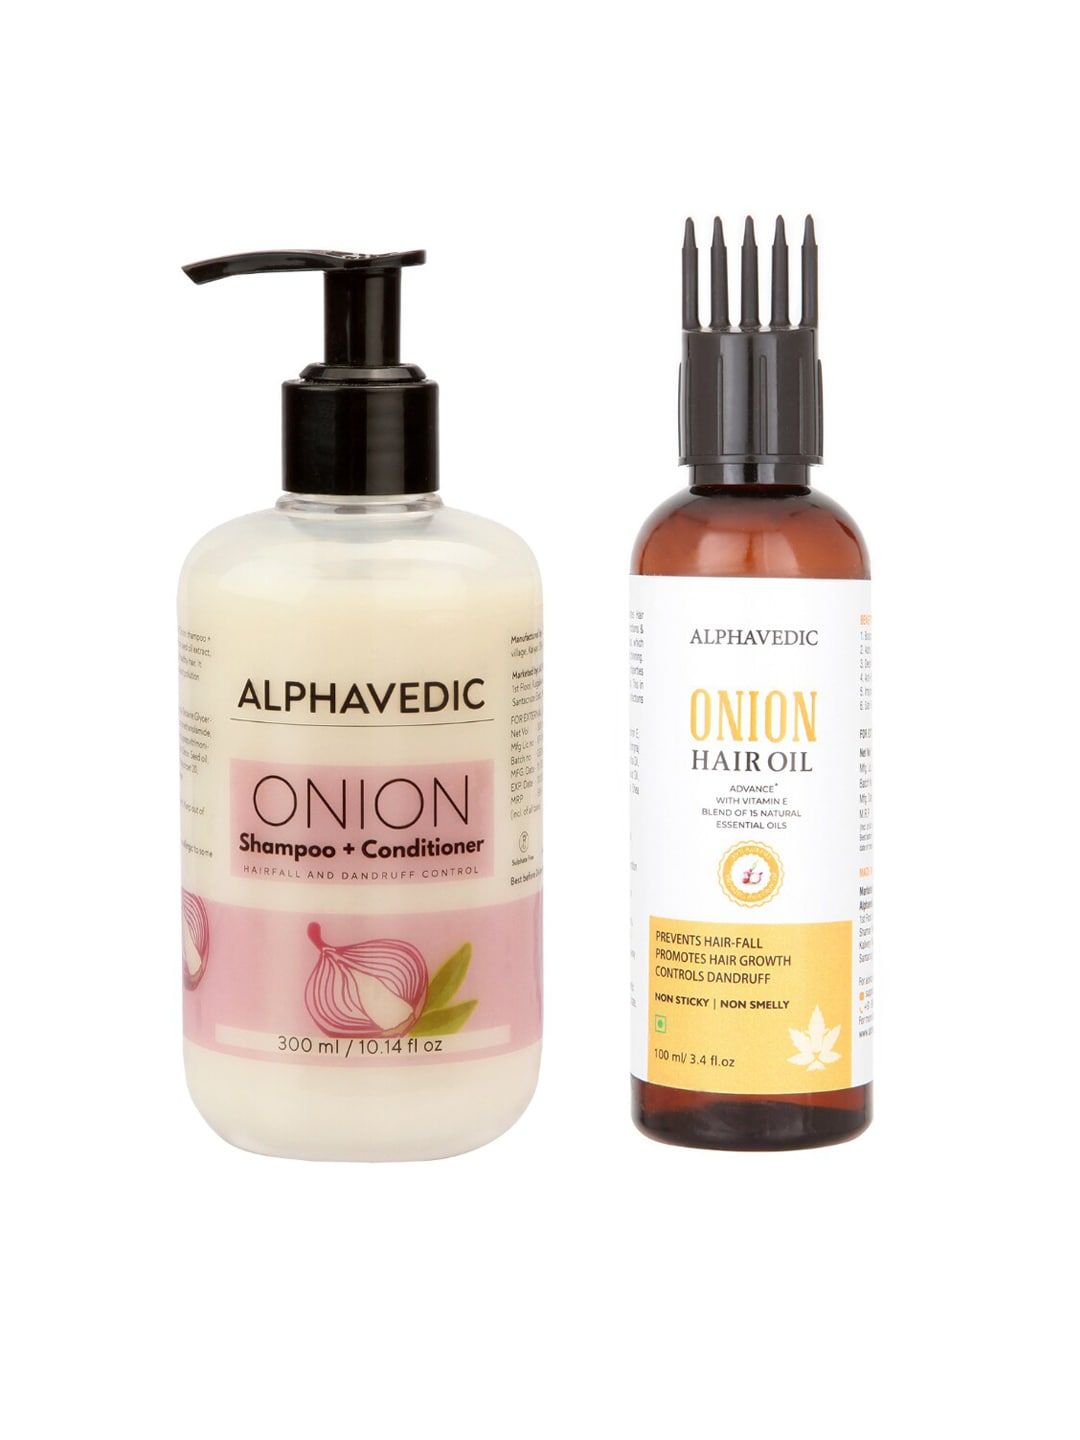 ALPHAVEDIC Set of Onion Shampoo+Conditioner & Onion Hair Oil Price in India